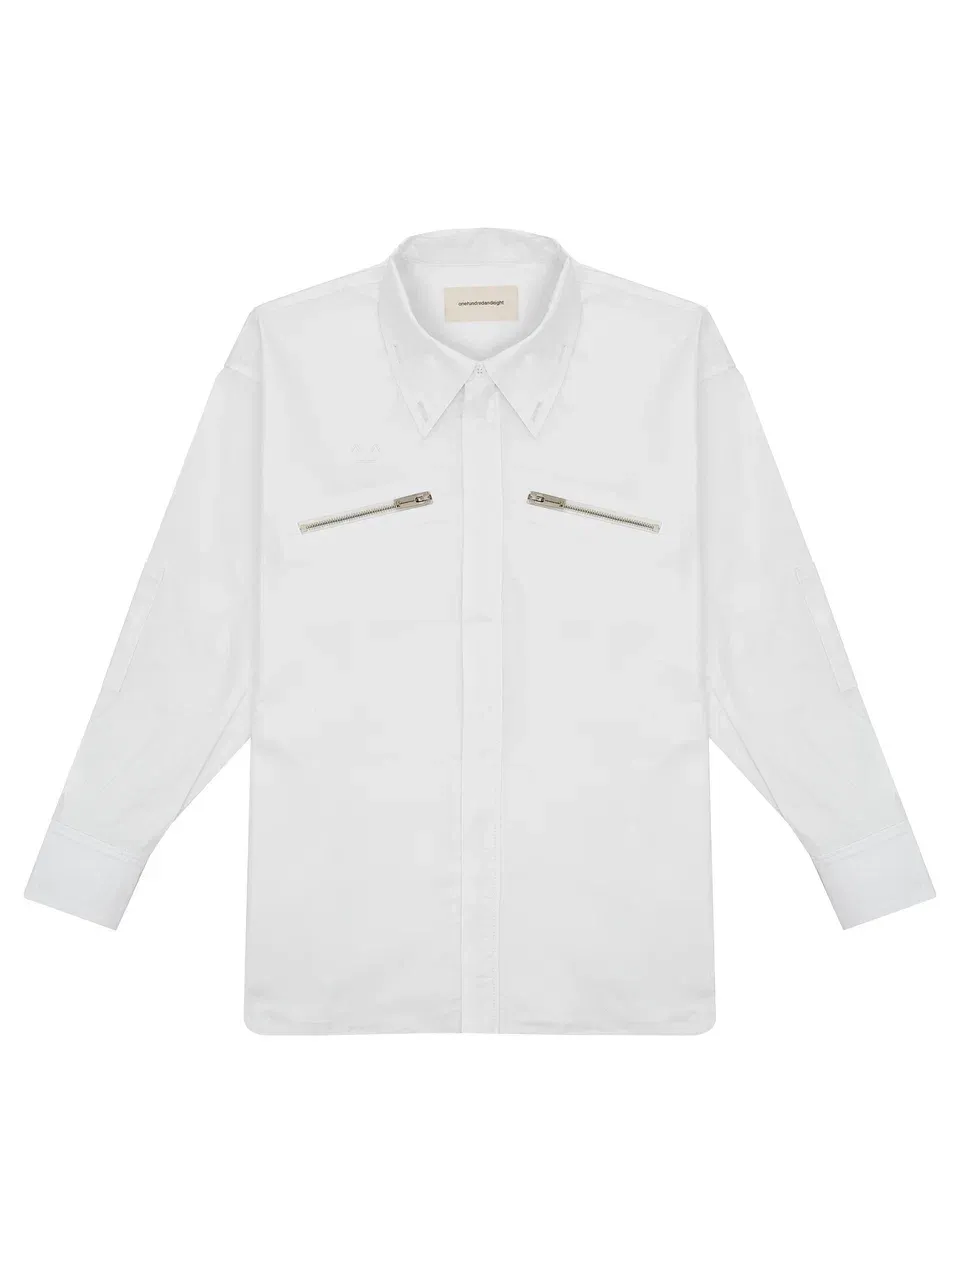 Рубашка «002» белая, размер: S